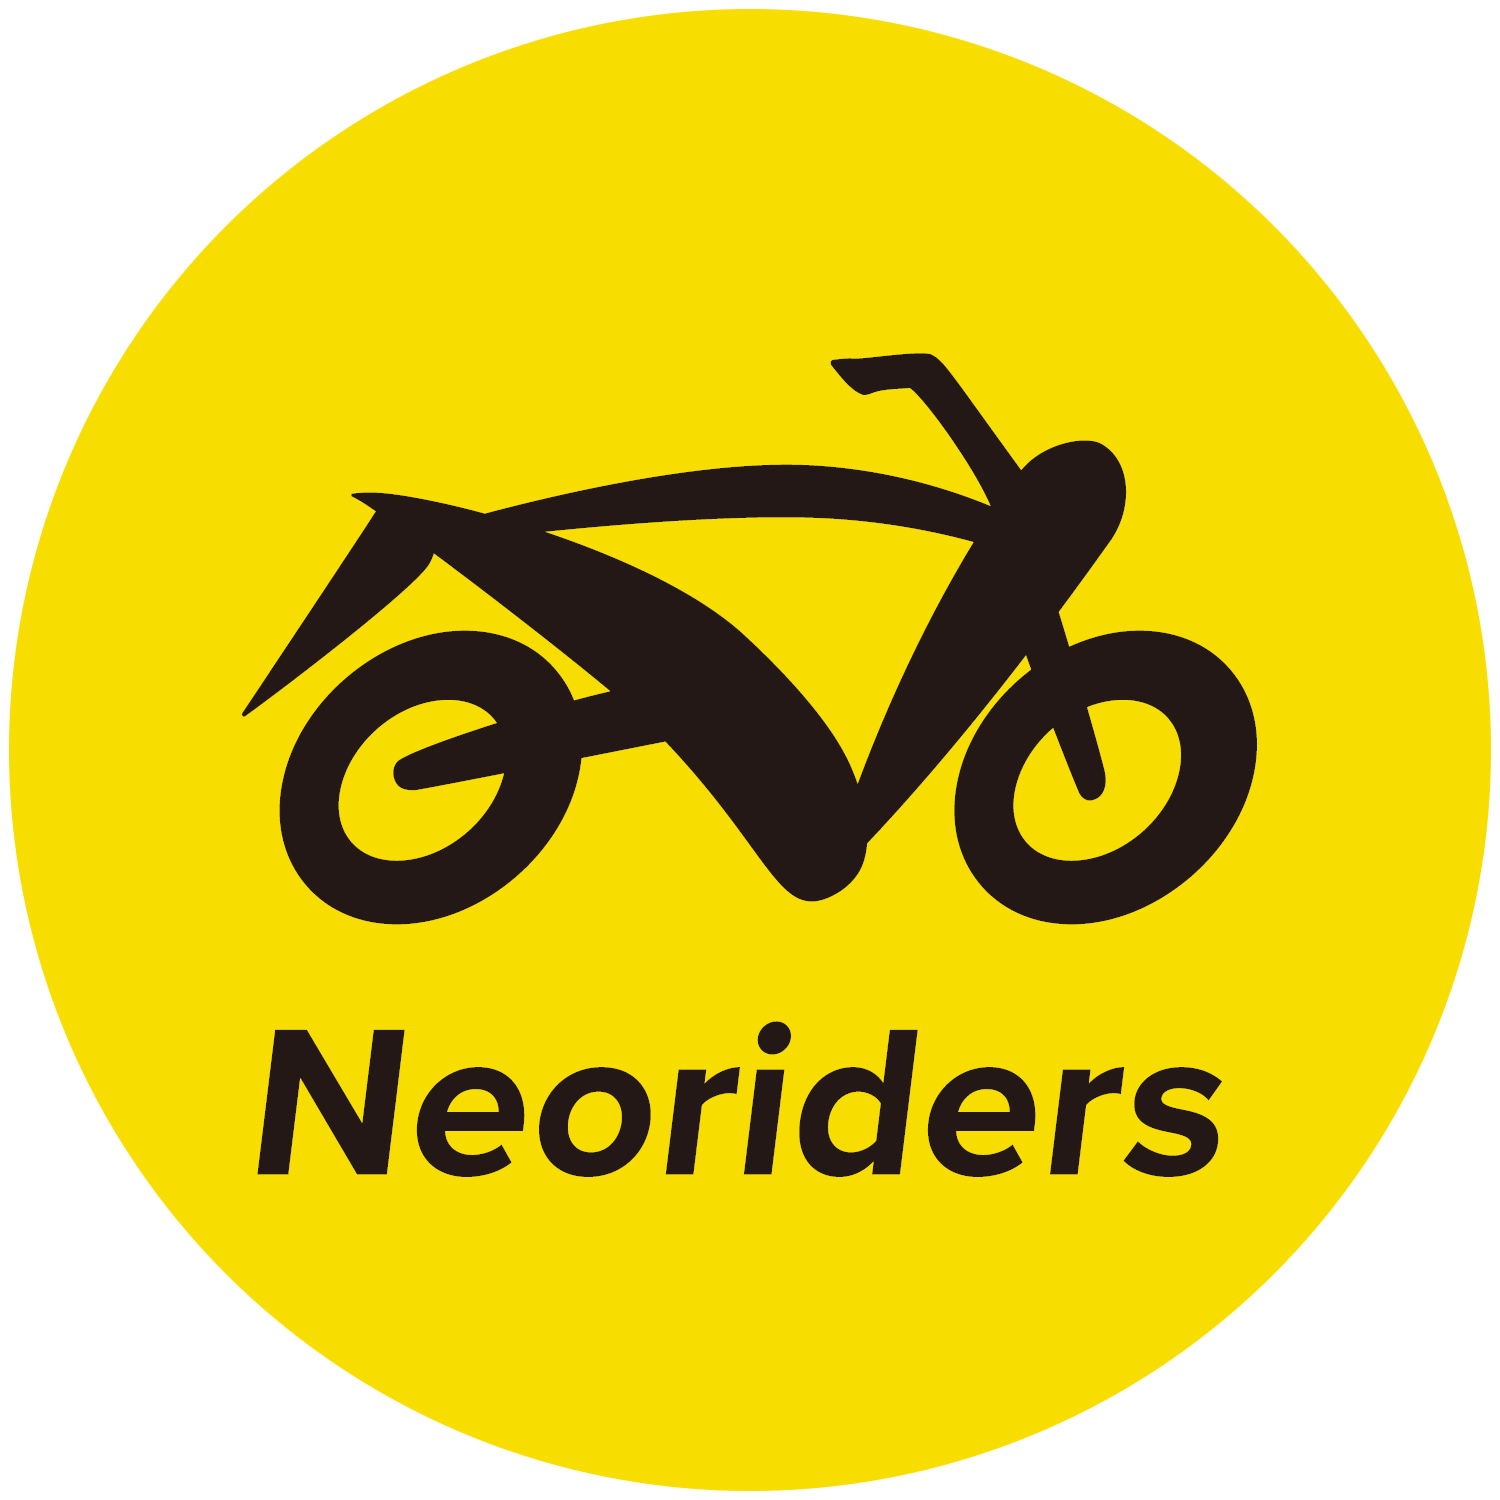 Neoriders Project